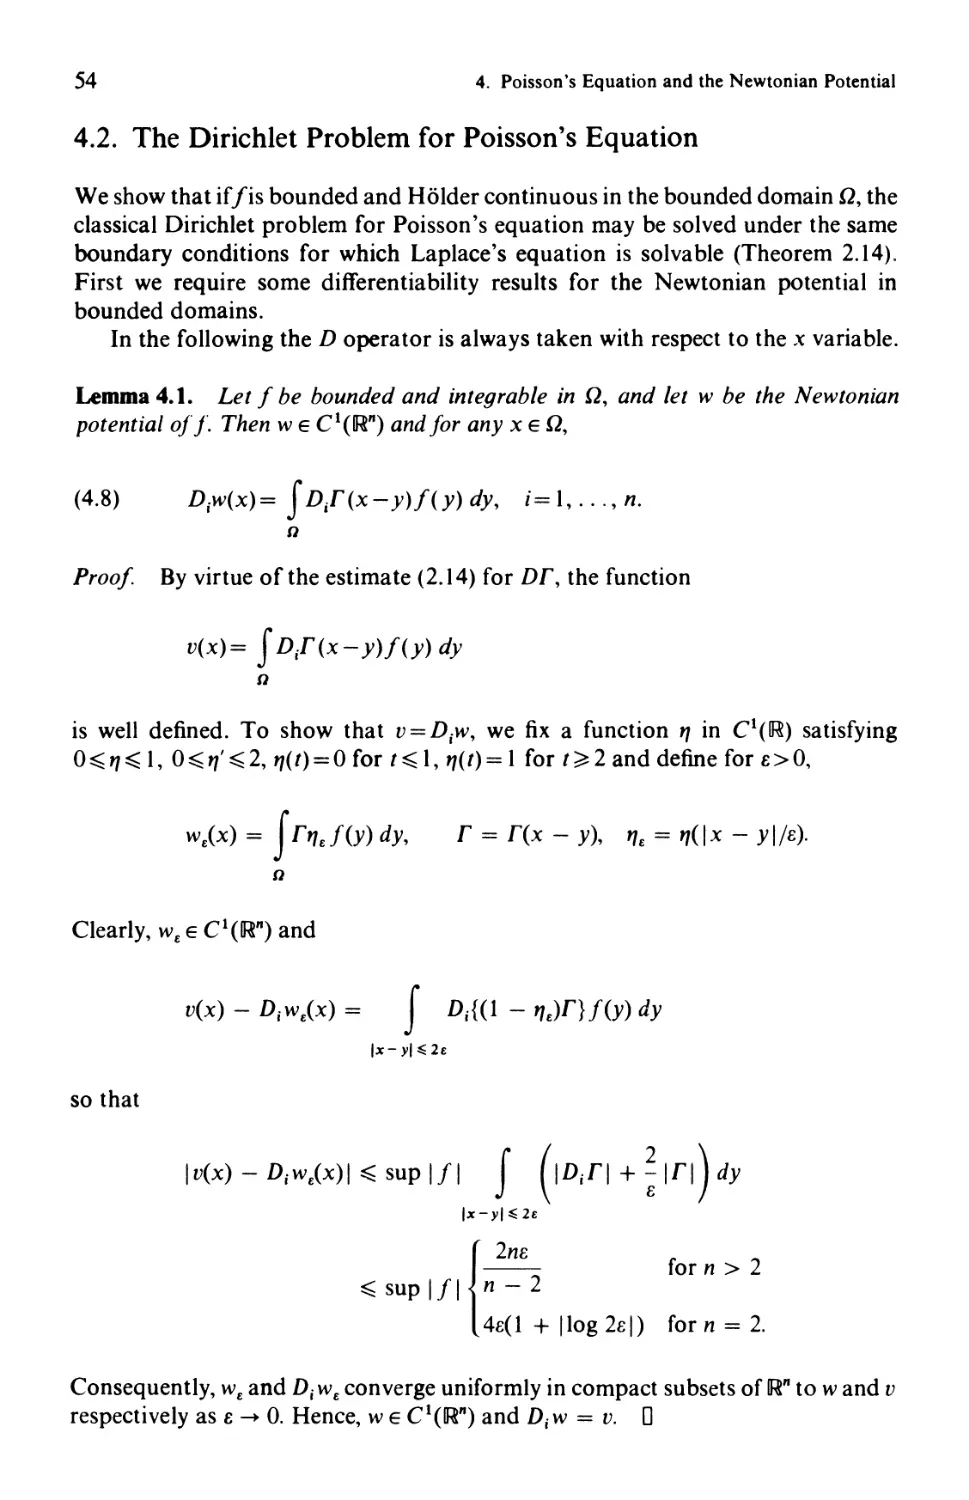 4.2.   The Dirichlet Problem for Poisson's Equation